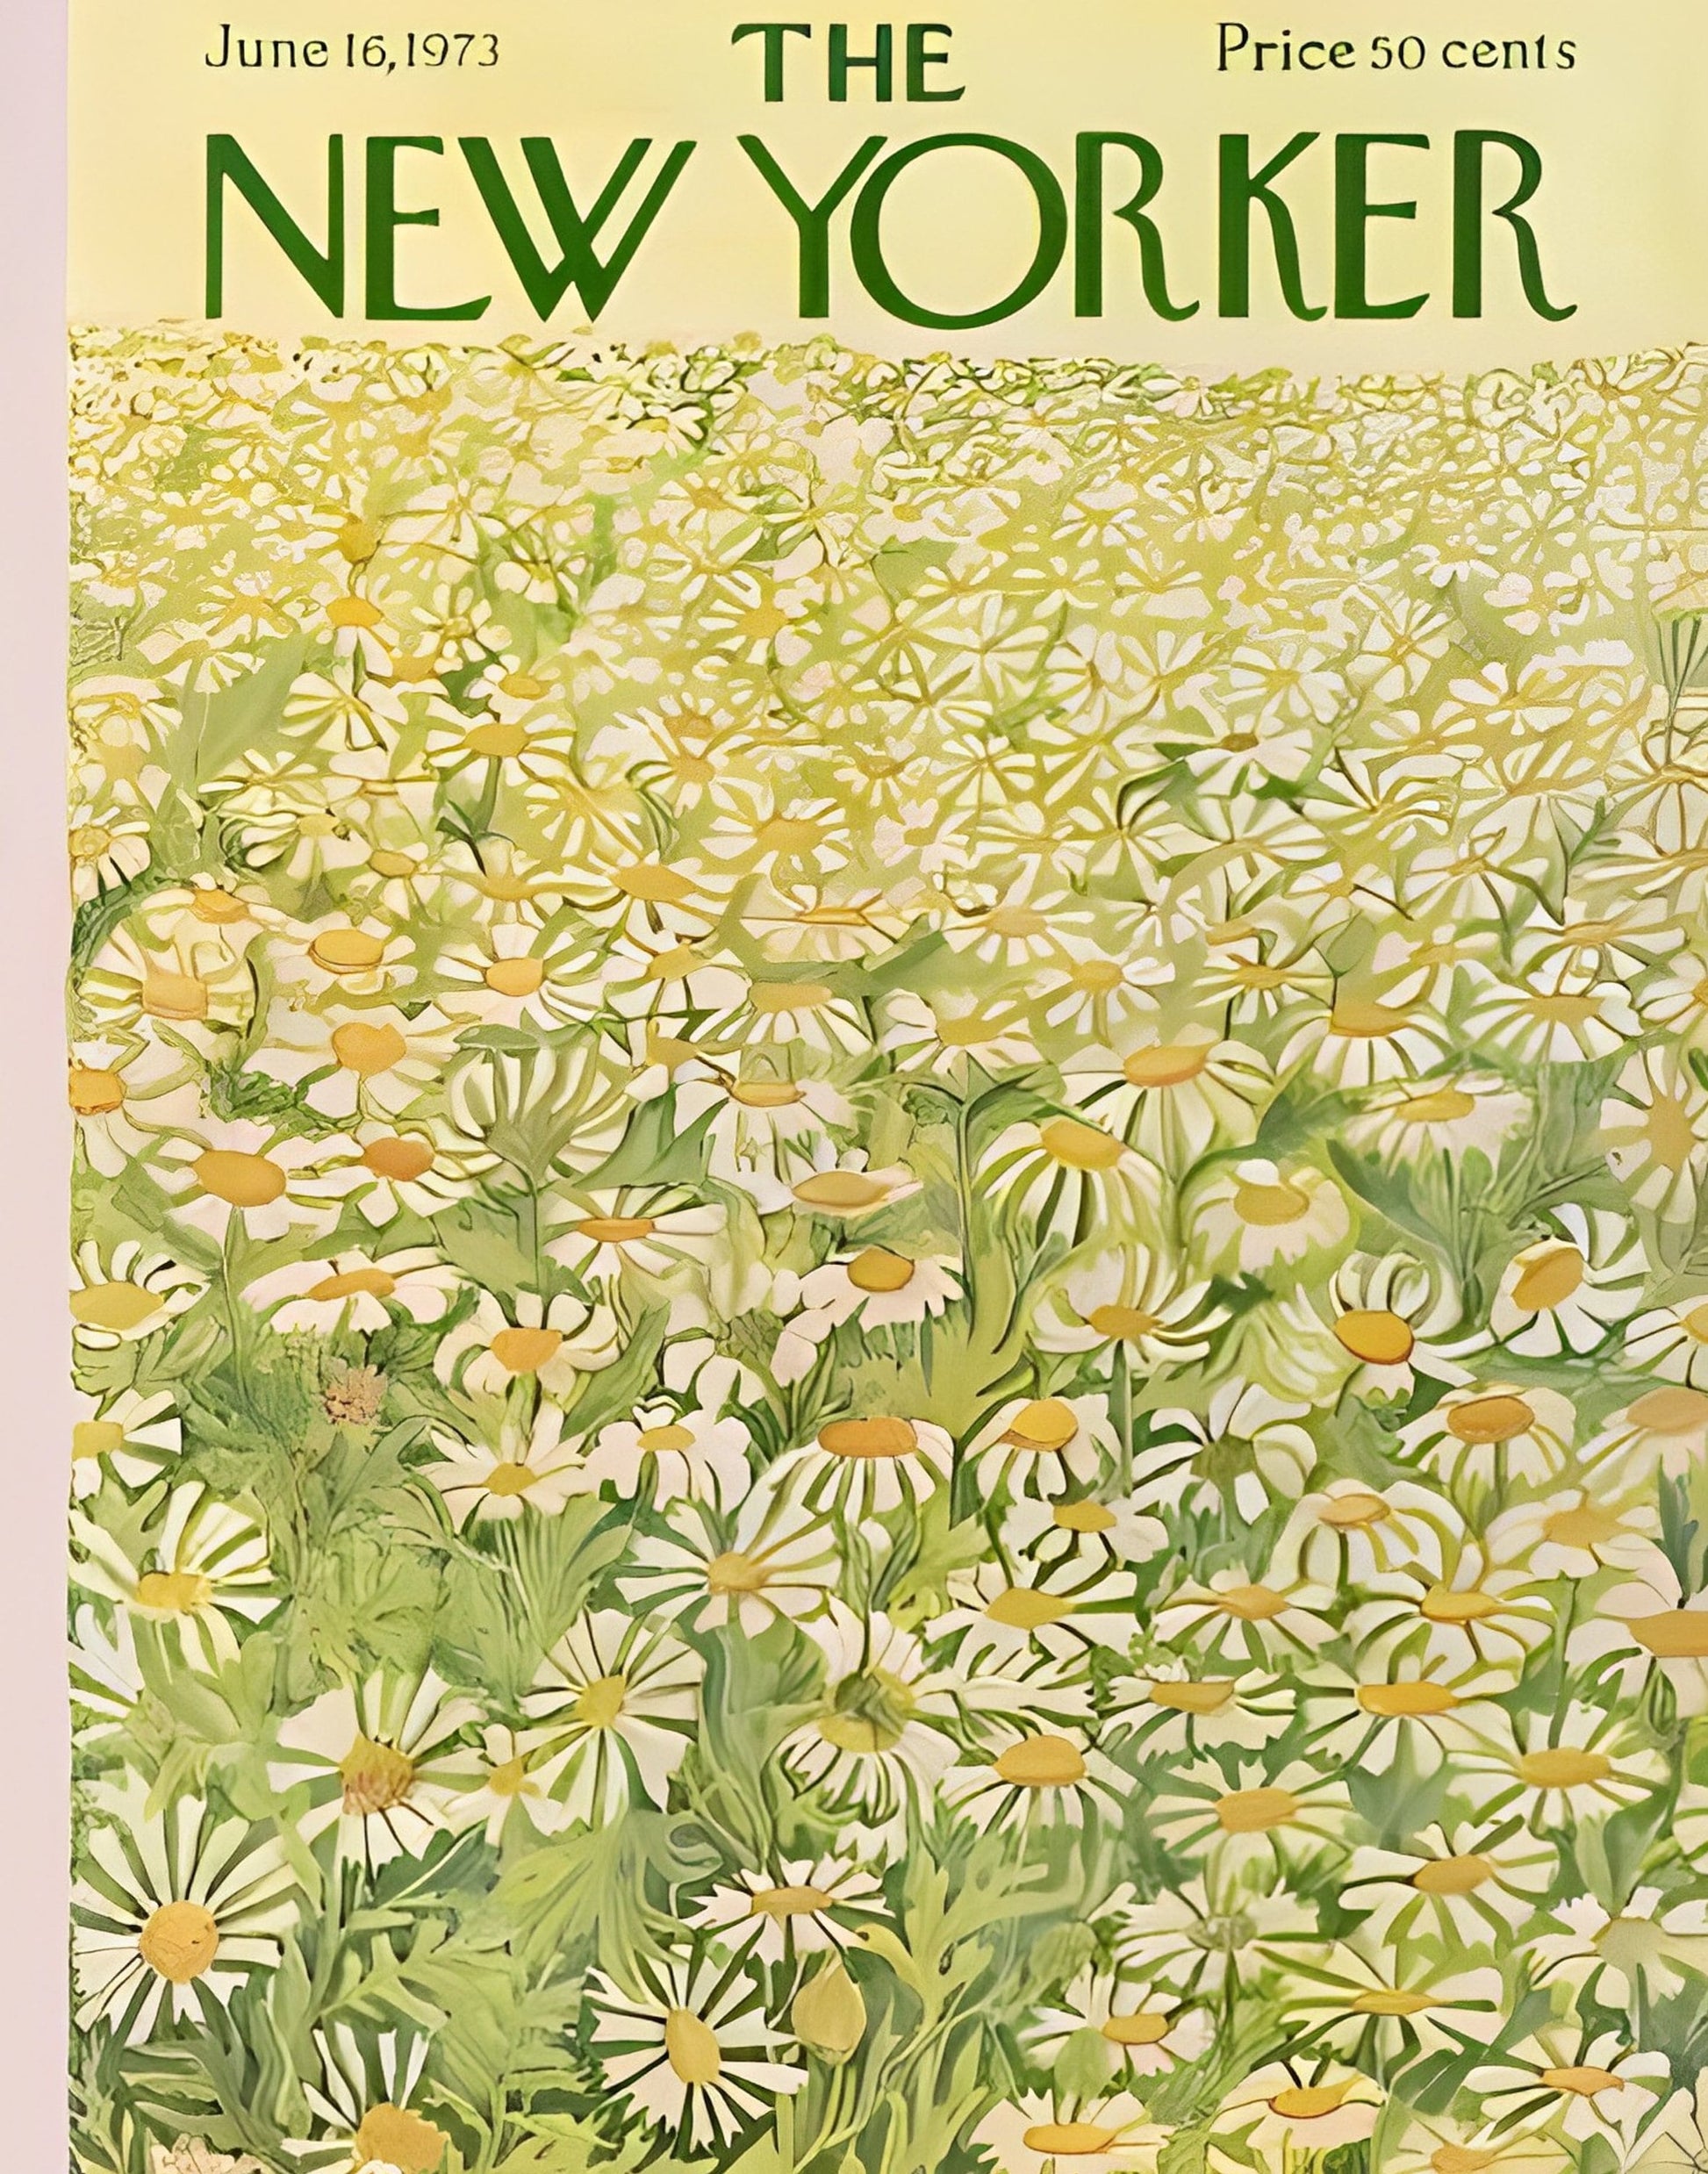 The New Yorker Vintage Poster June 1973 edition, Vintage Art DIGITAL PRINT, The New Yorker Retro Magazine Prints, Botanical Green Wall Decor